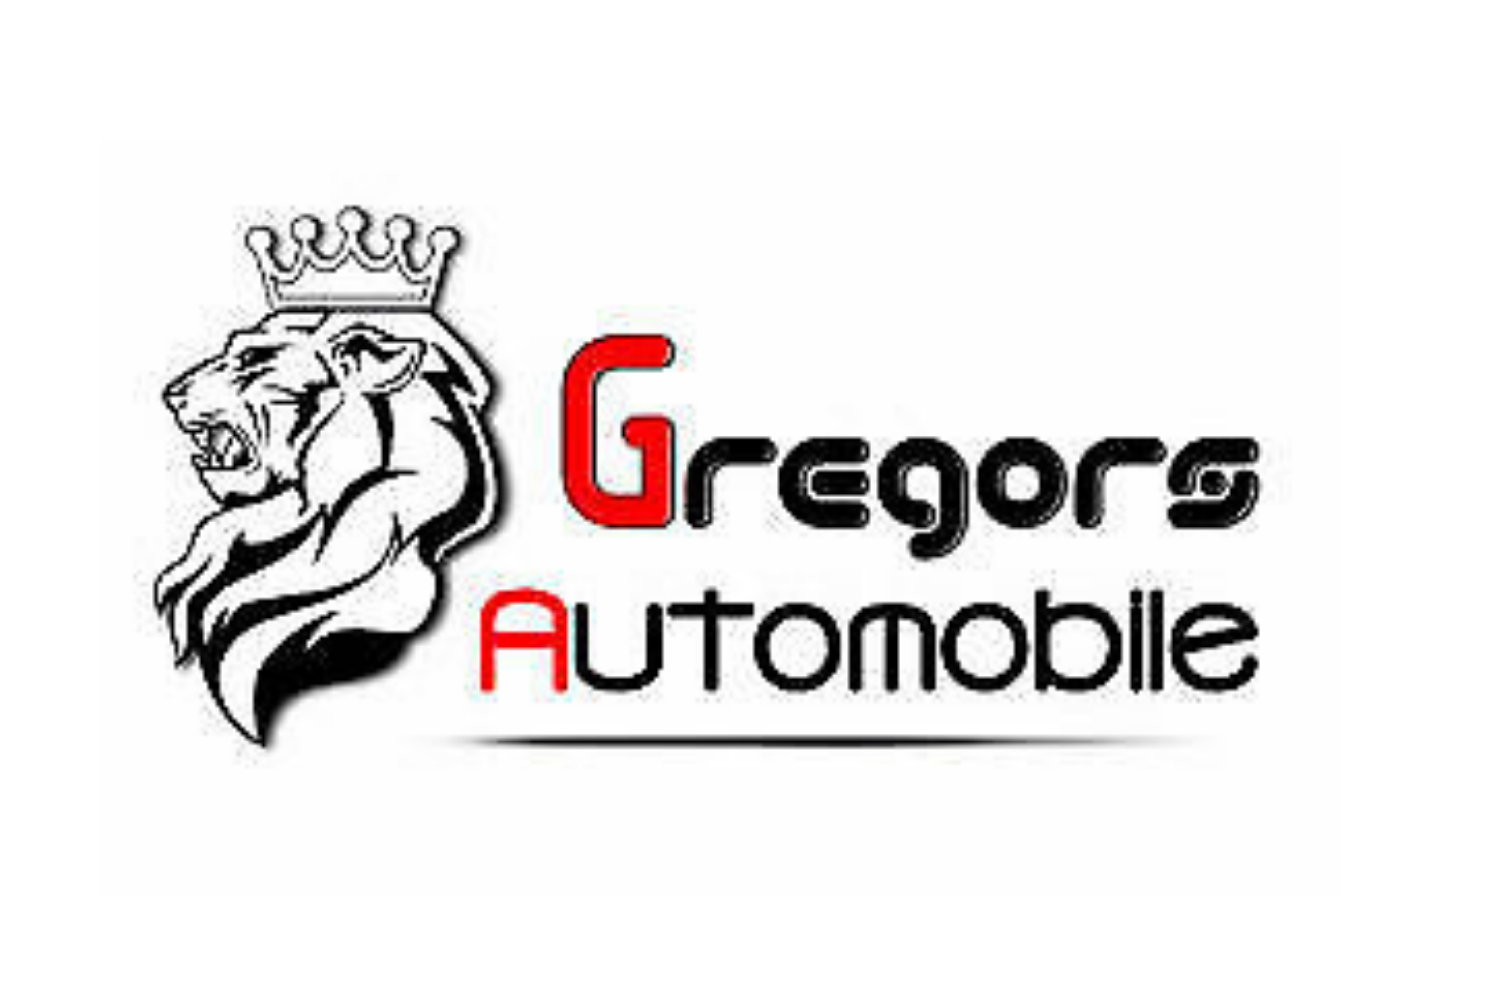 Gregors Automobile - AUTOproff kunde